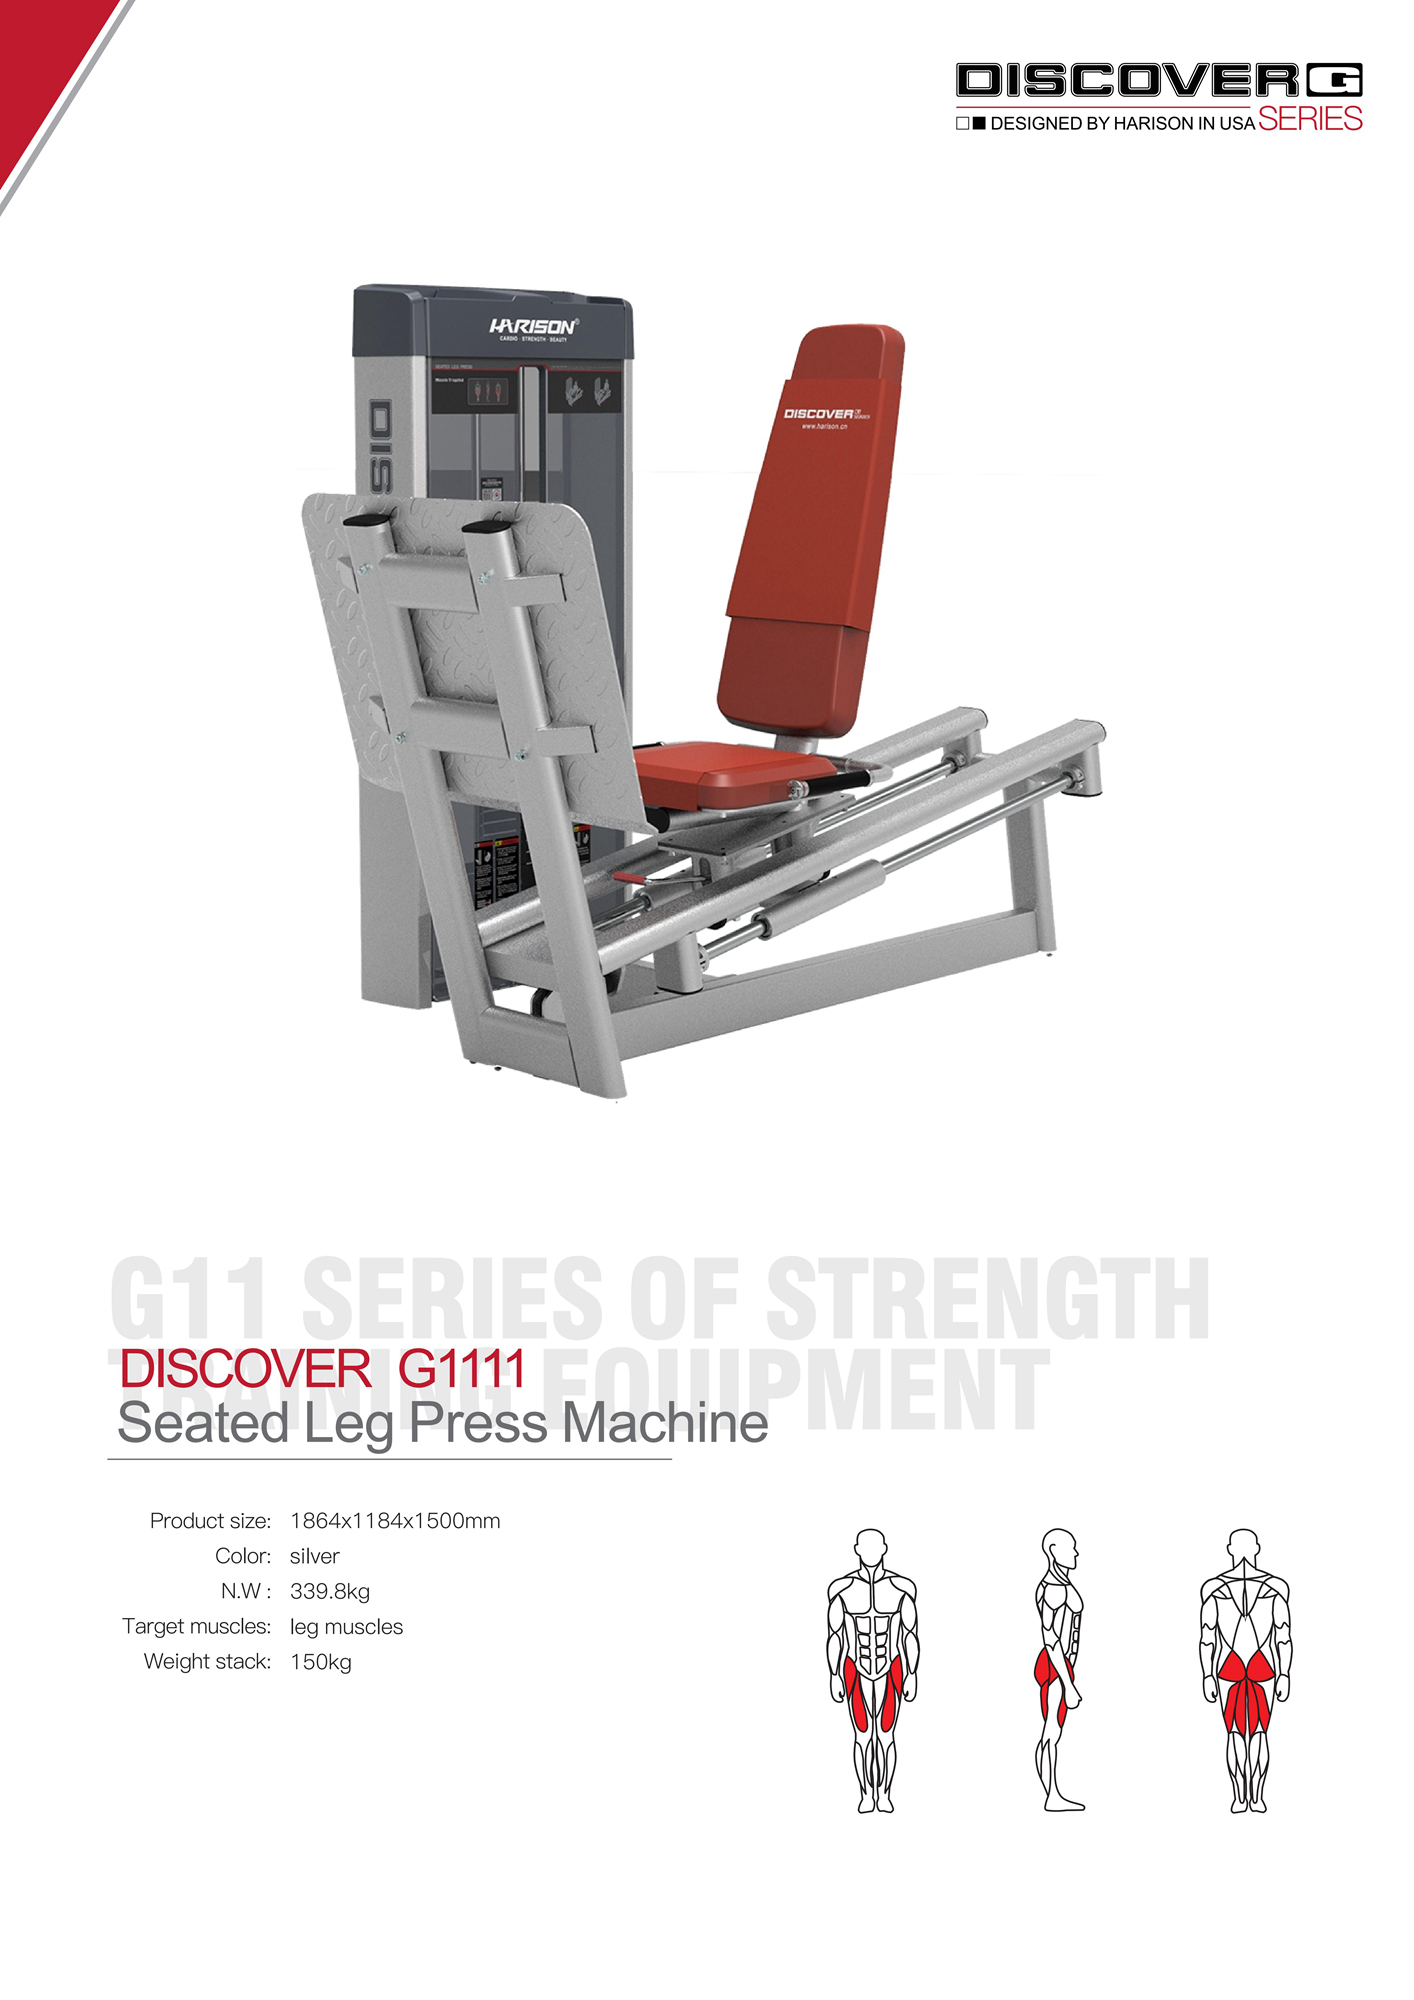 DISCOVER G1111 Seated Leg Press Machine